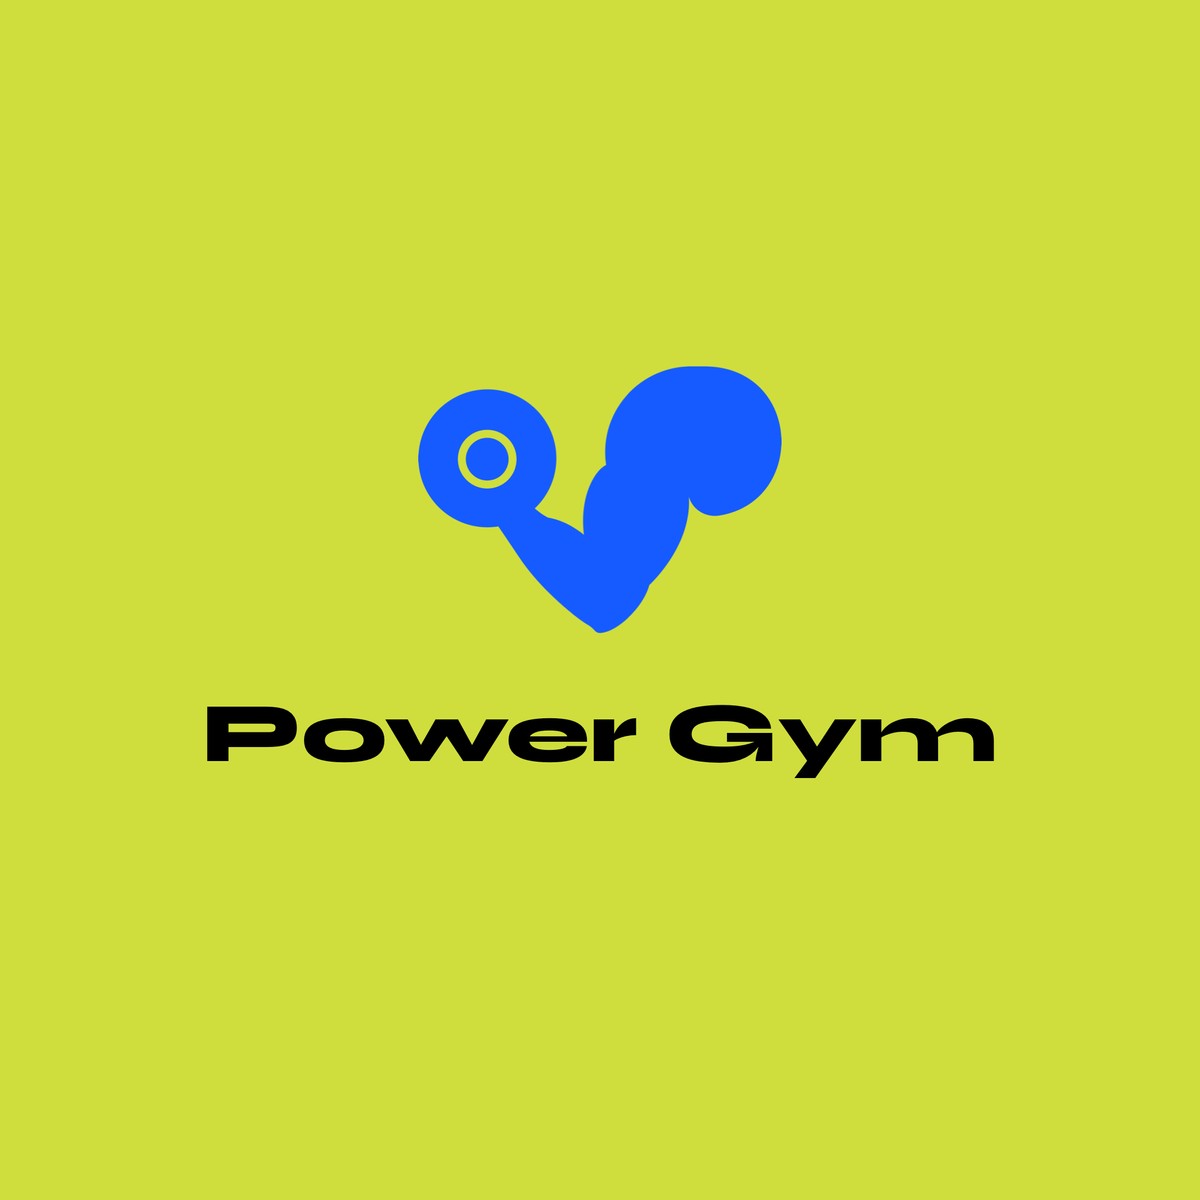 Gym logo 